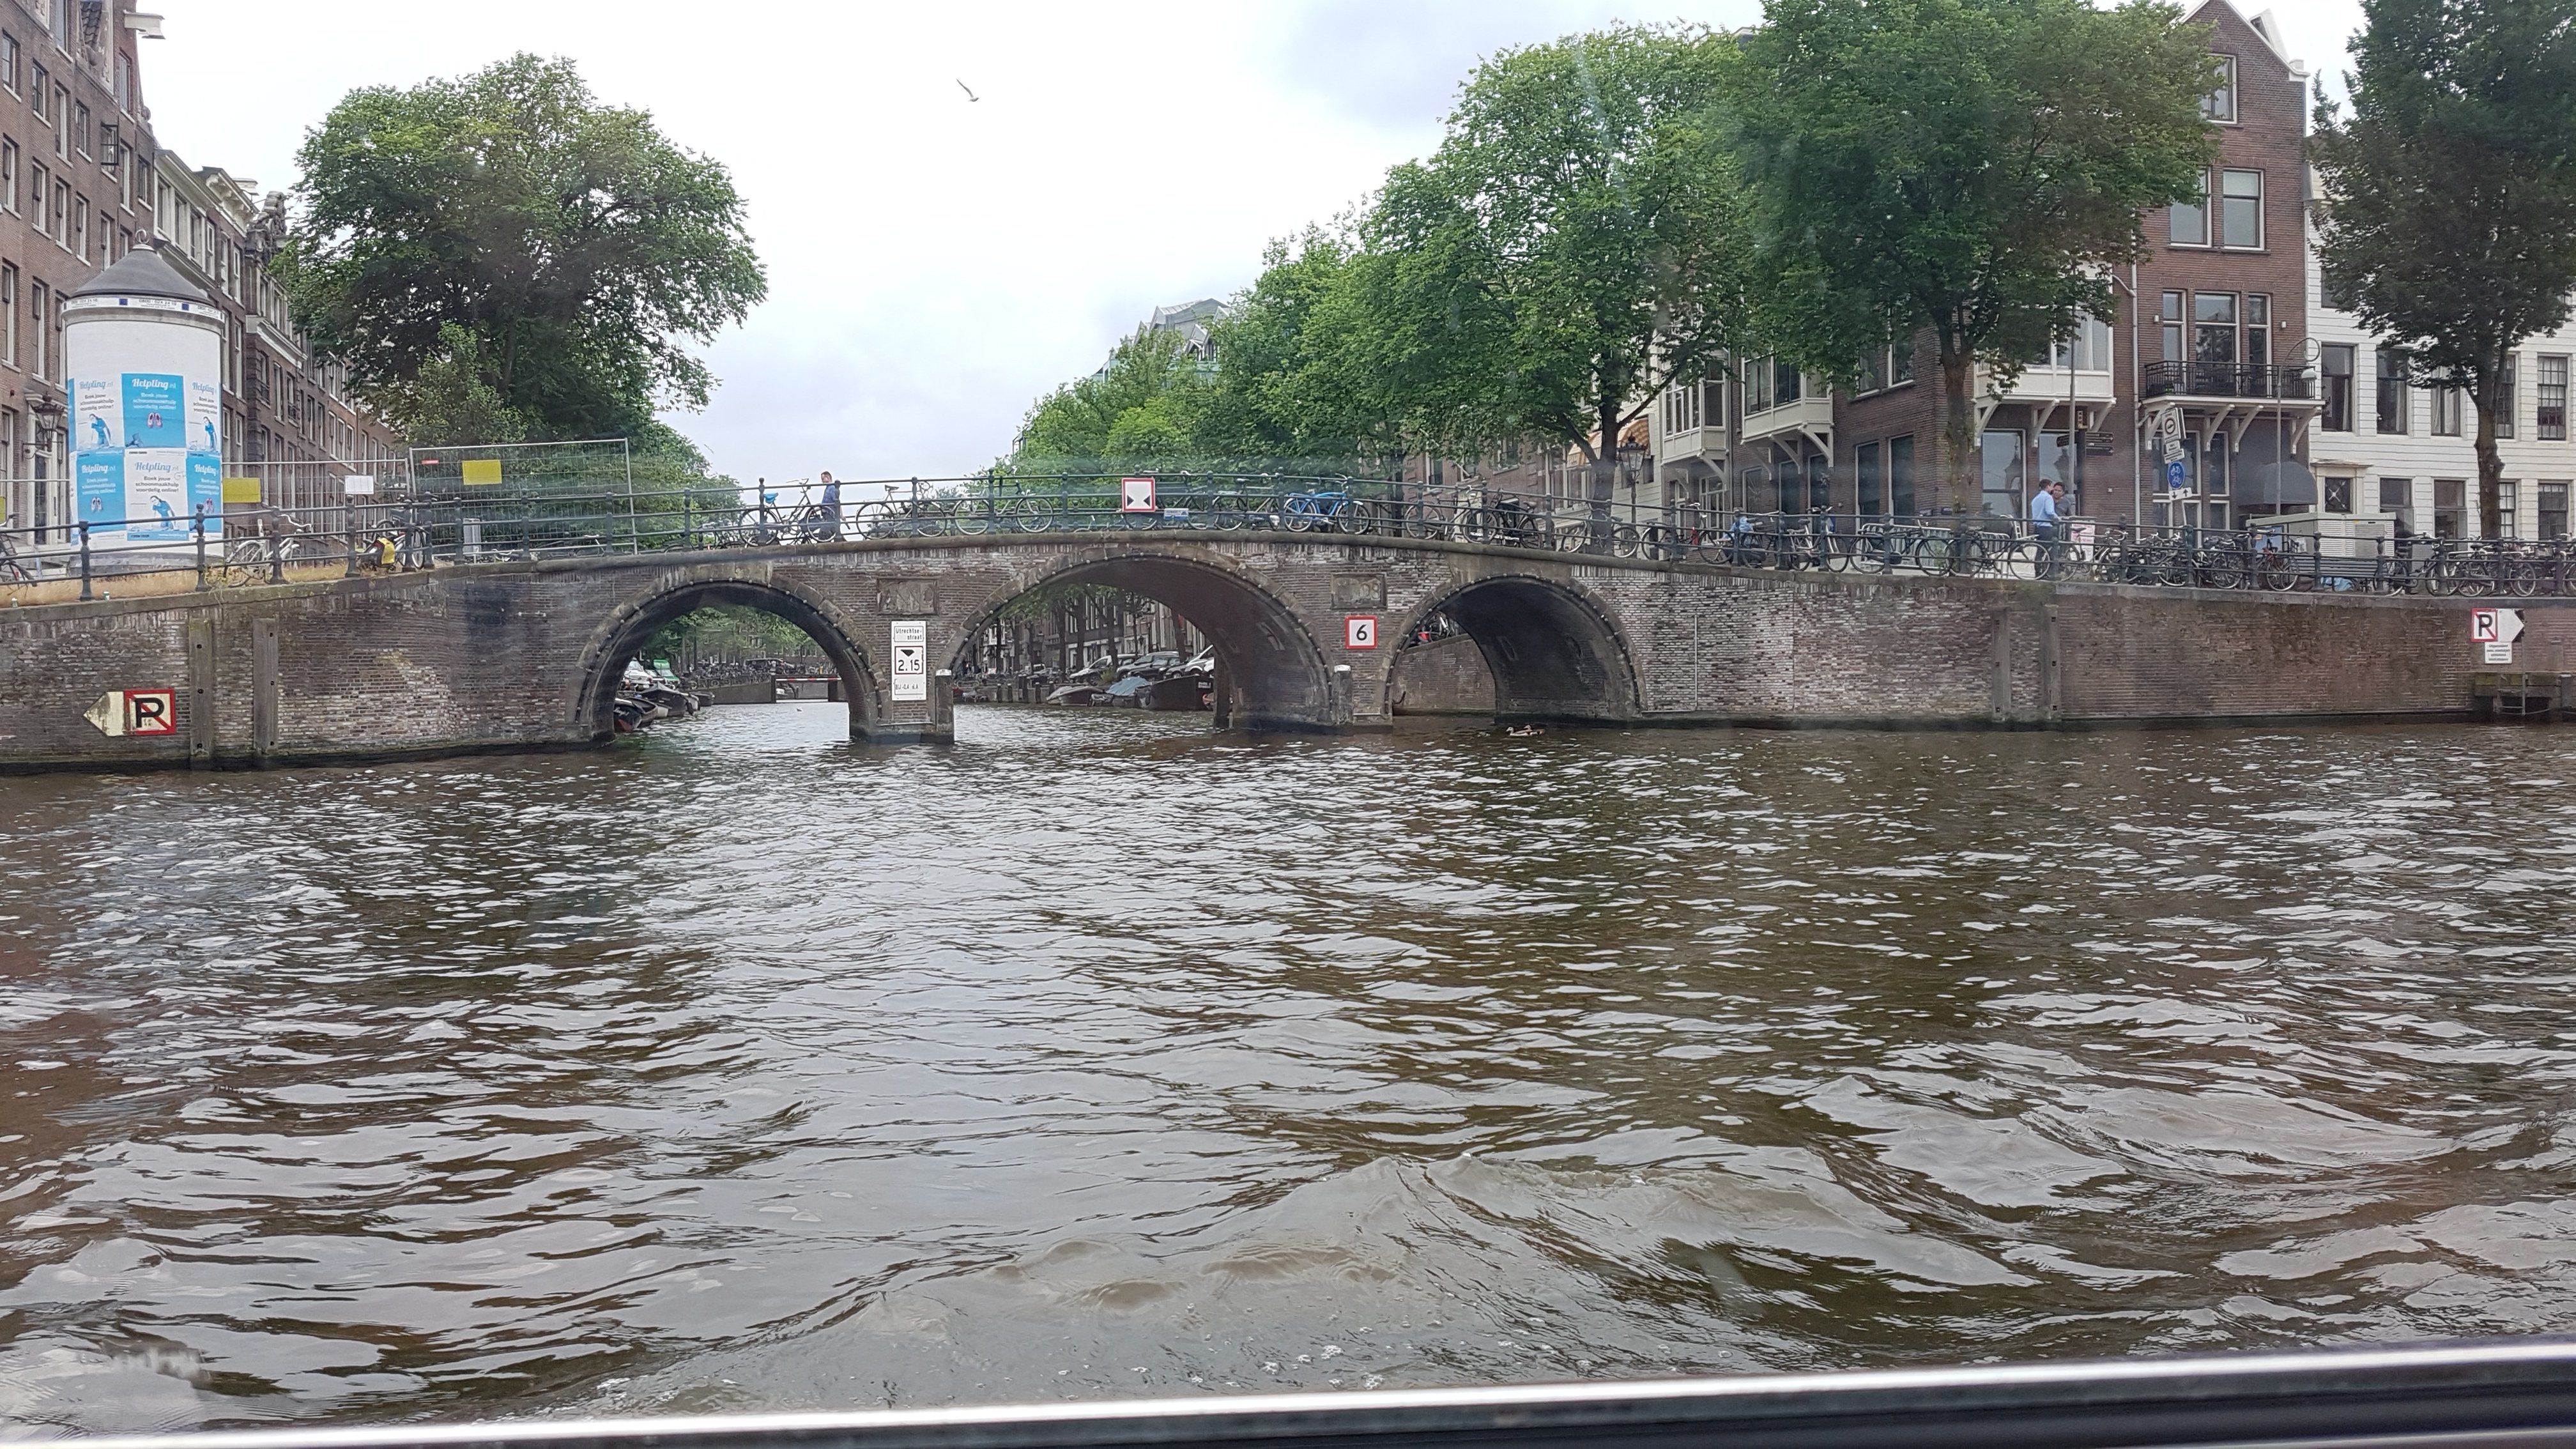 Amsterdam canals.jpg